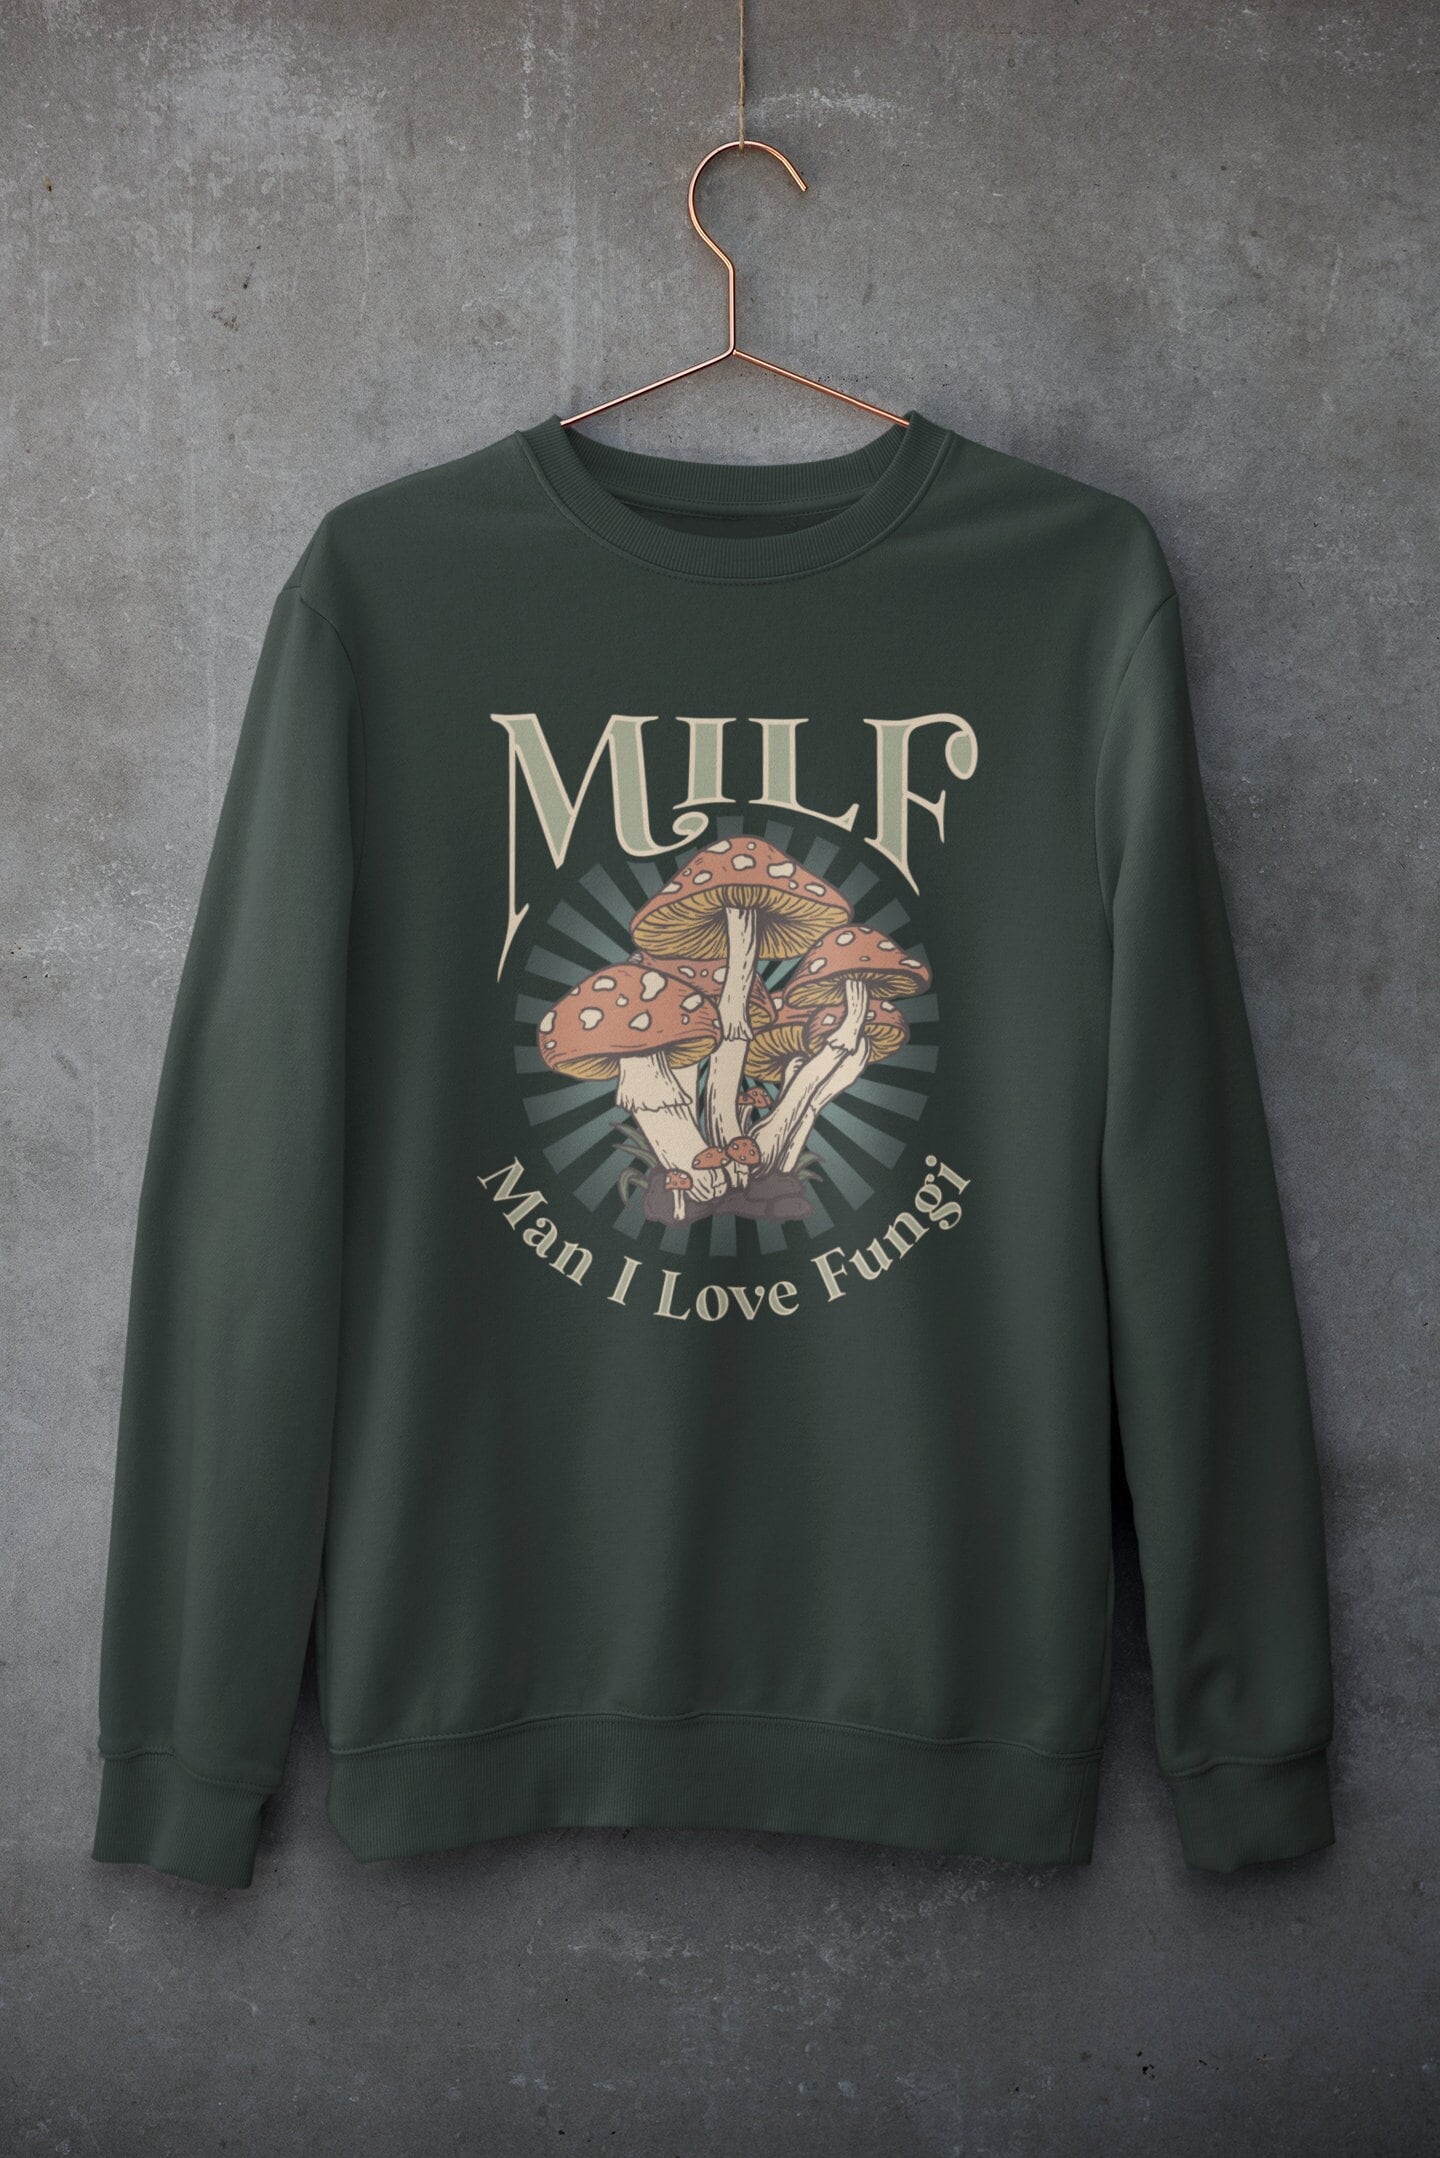 Discover Mushroom Sweatshirt - MILF Man I Love Fungi - Boho Mama - Mother's Day Gift Sweatshirts